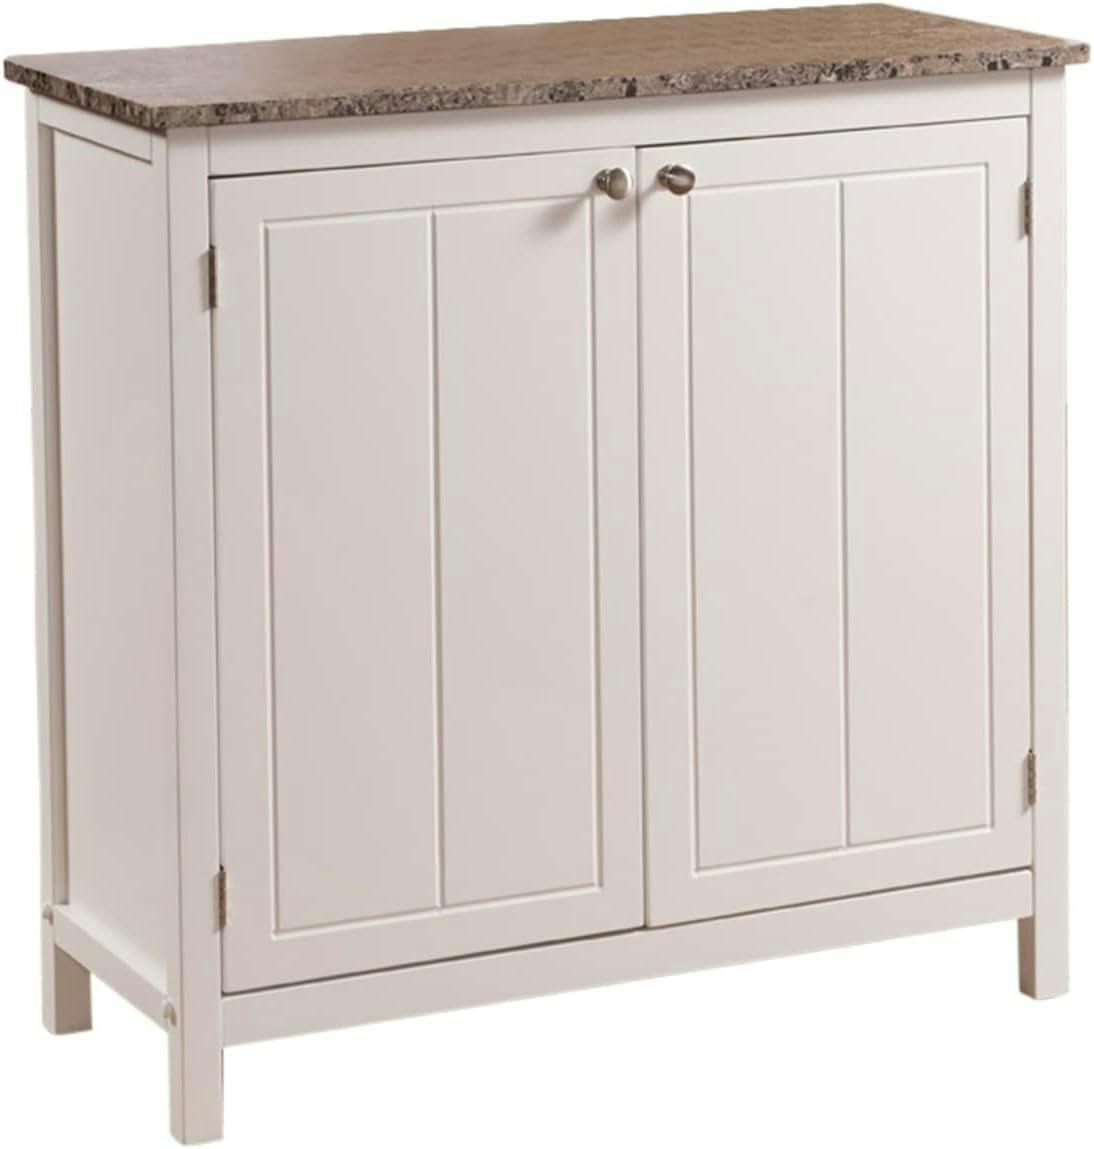 Elegant White Marble Top Kitchen Cabinet with Adjustable Shelf